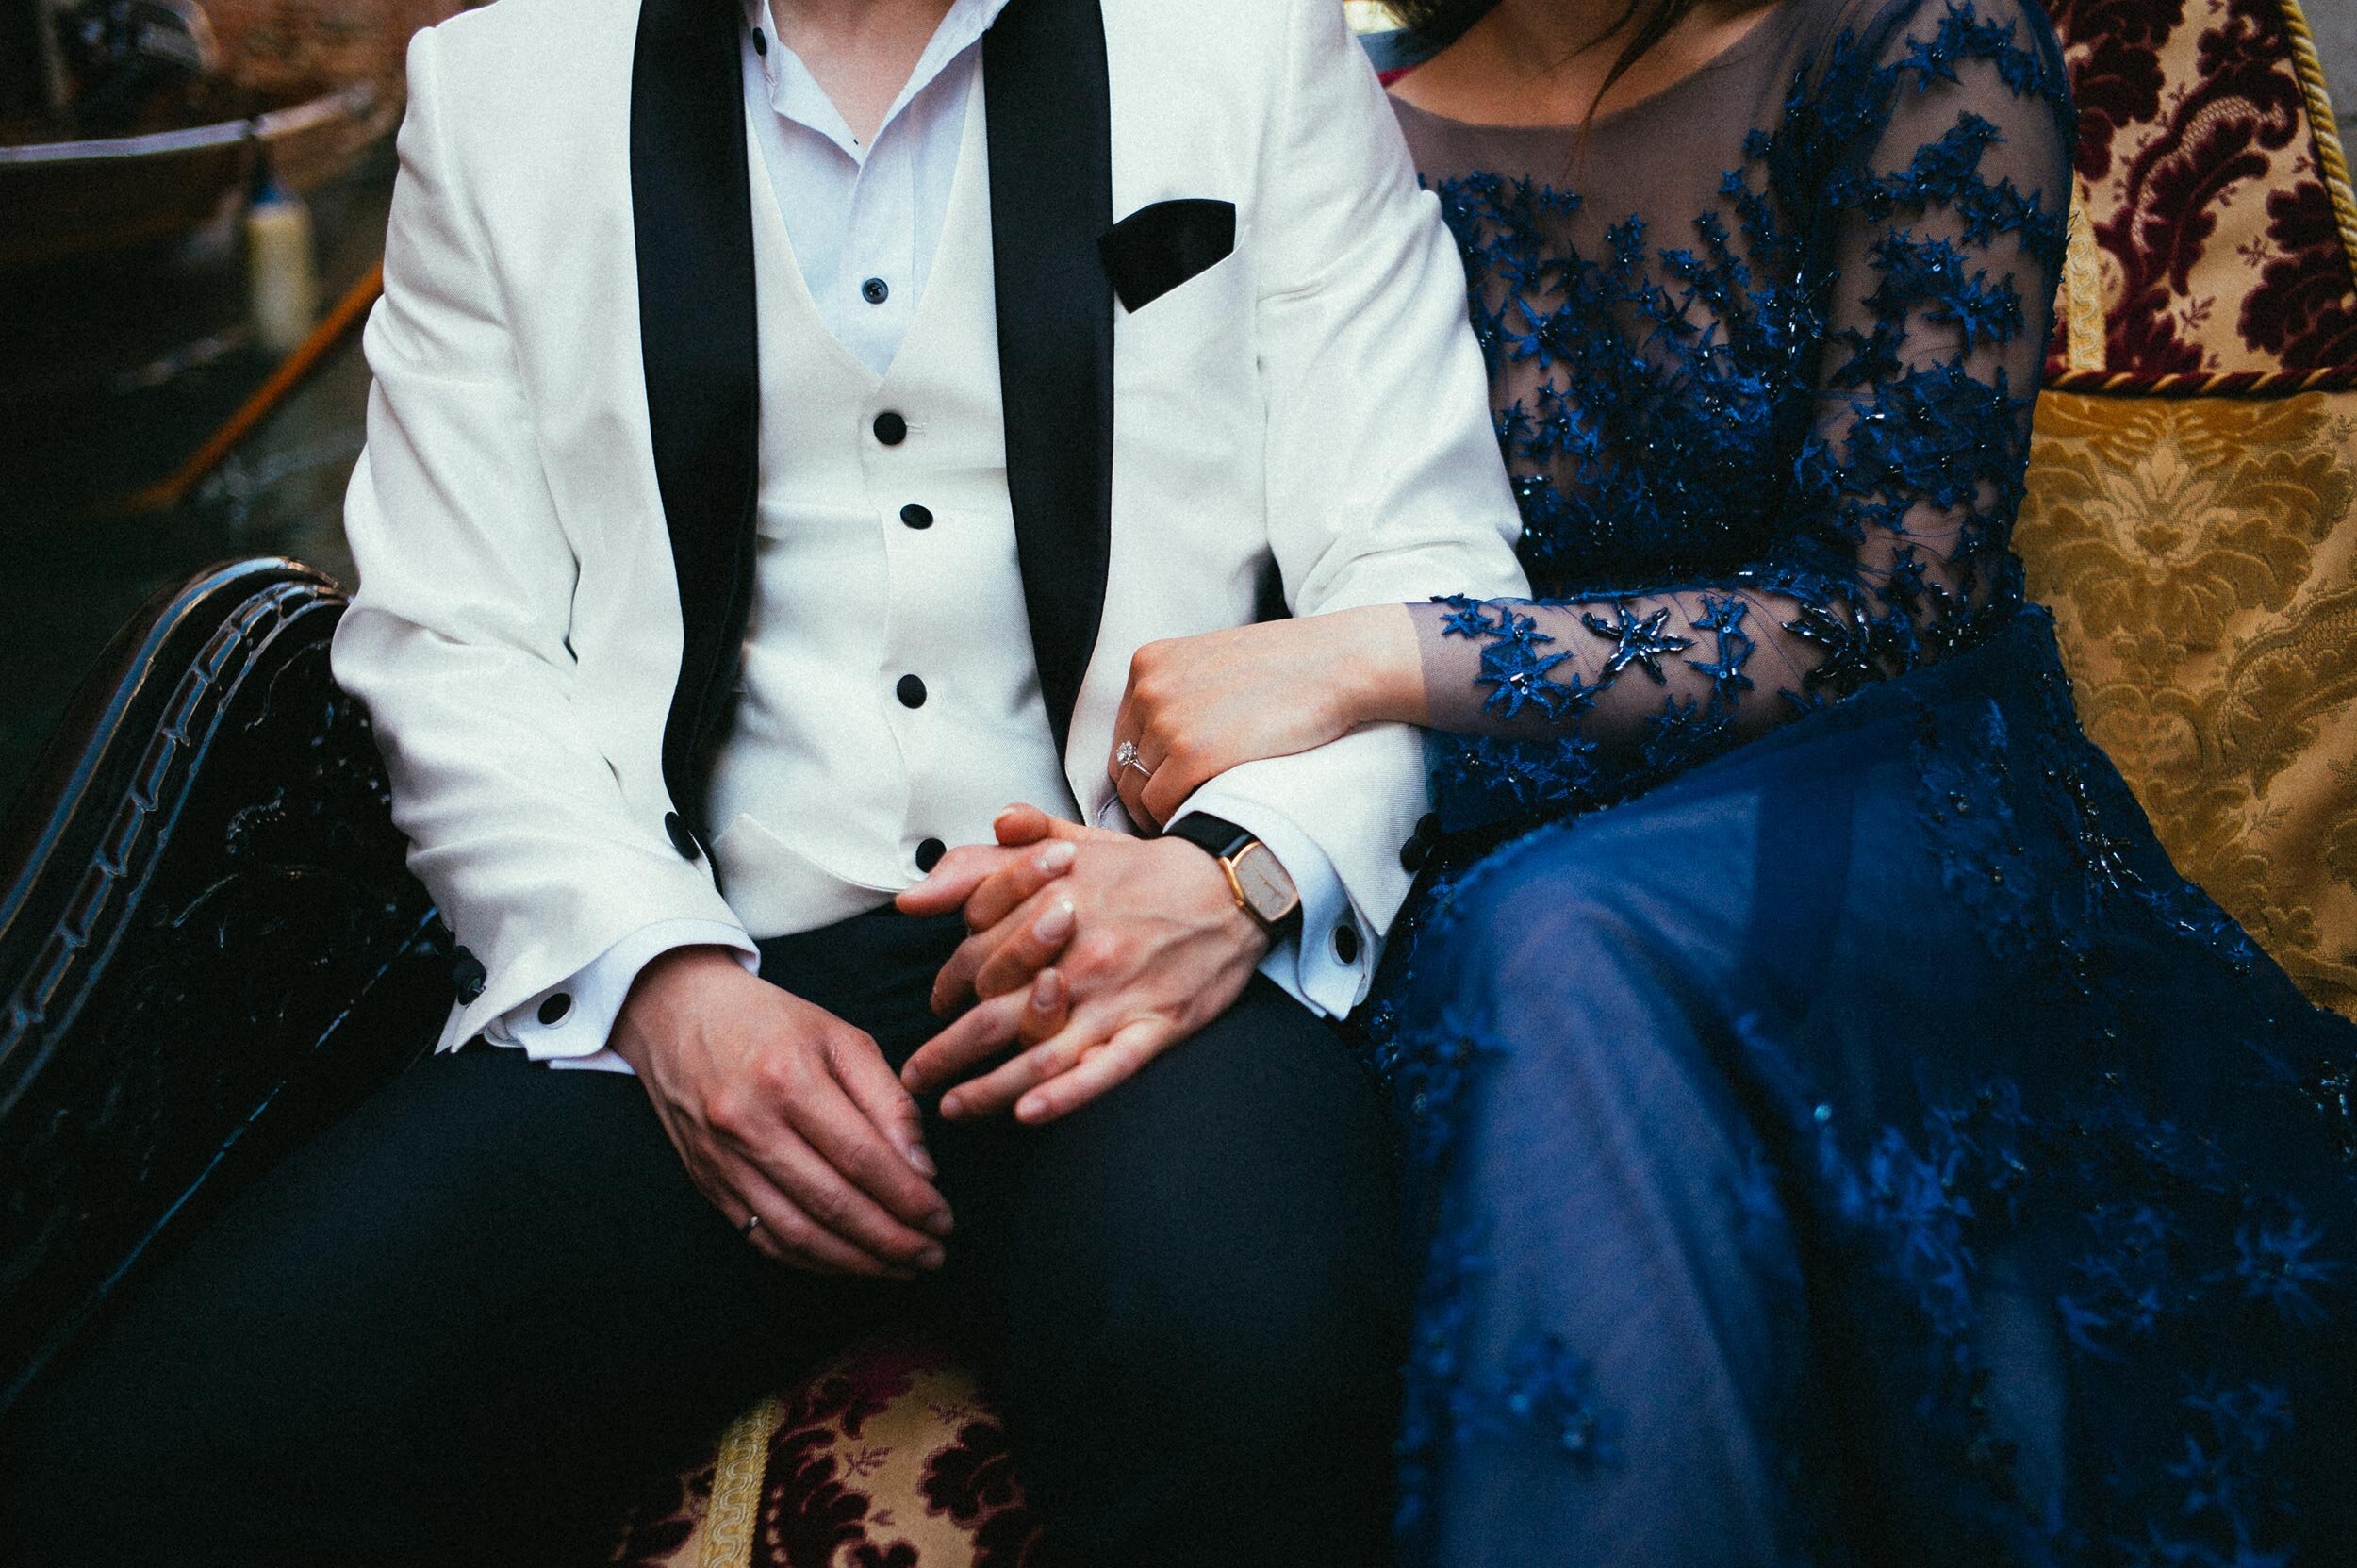 Engagement-in-Venice-Pre-Wedding-Photographer-Italy-Alessandro-Avenali-2018-6.jpg